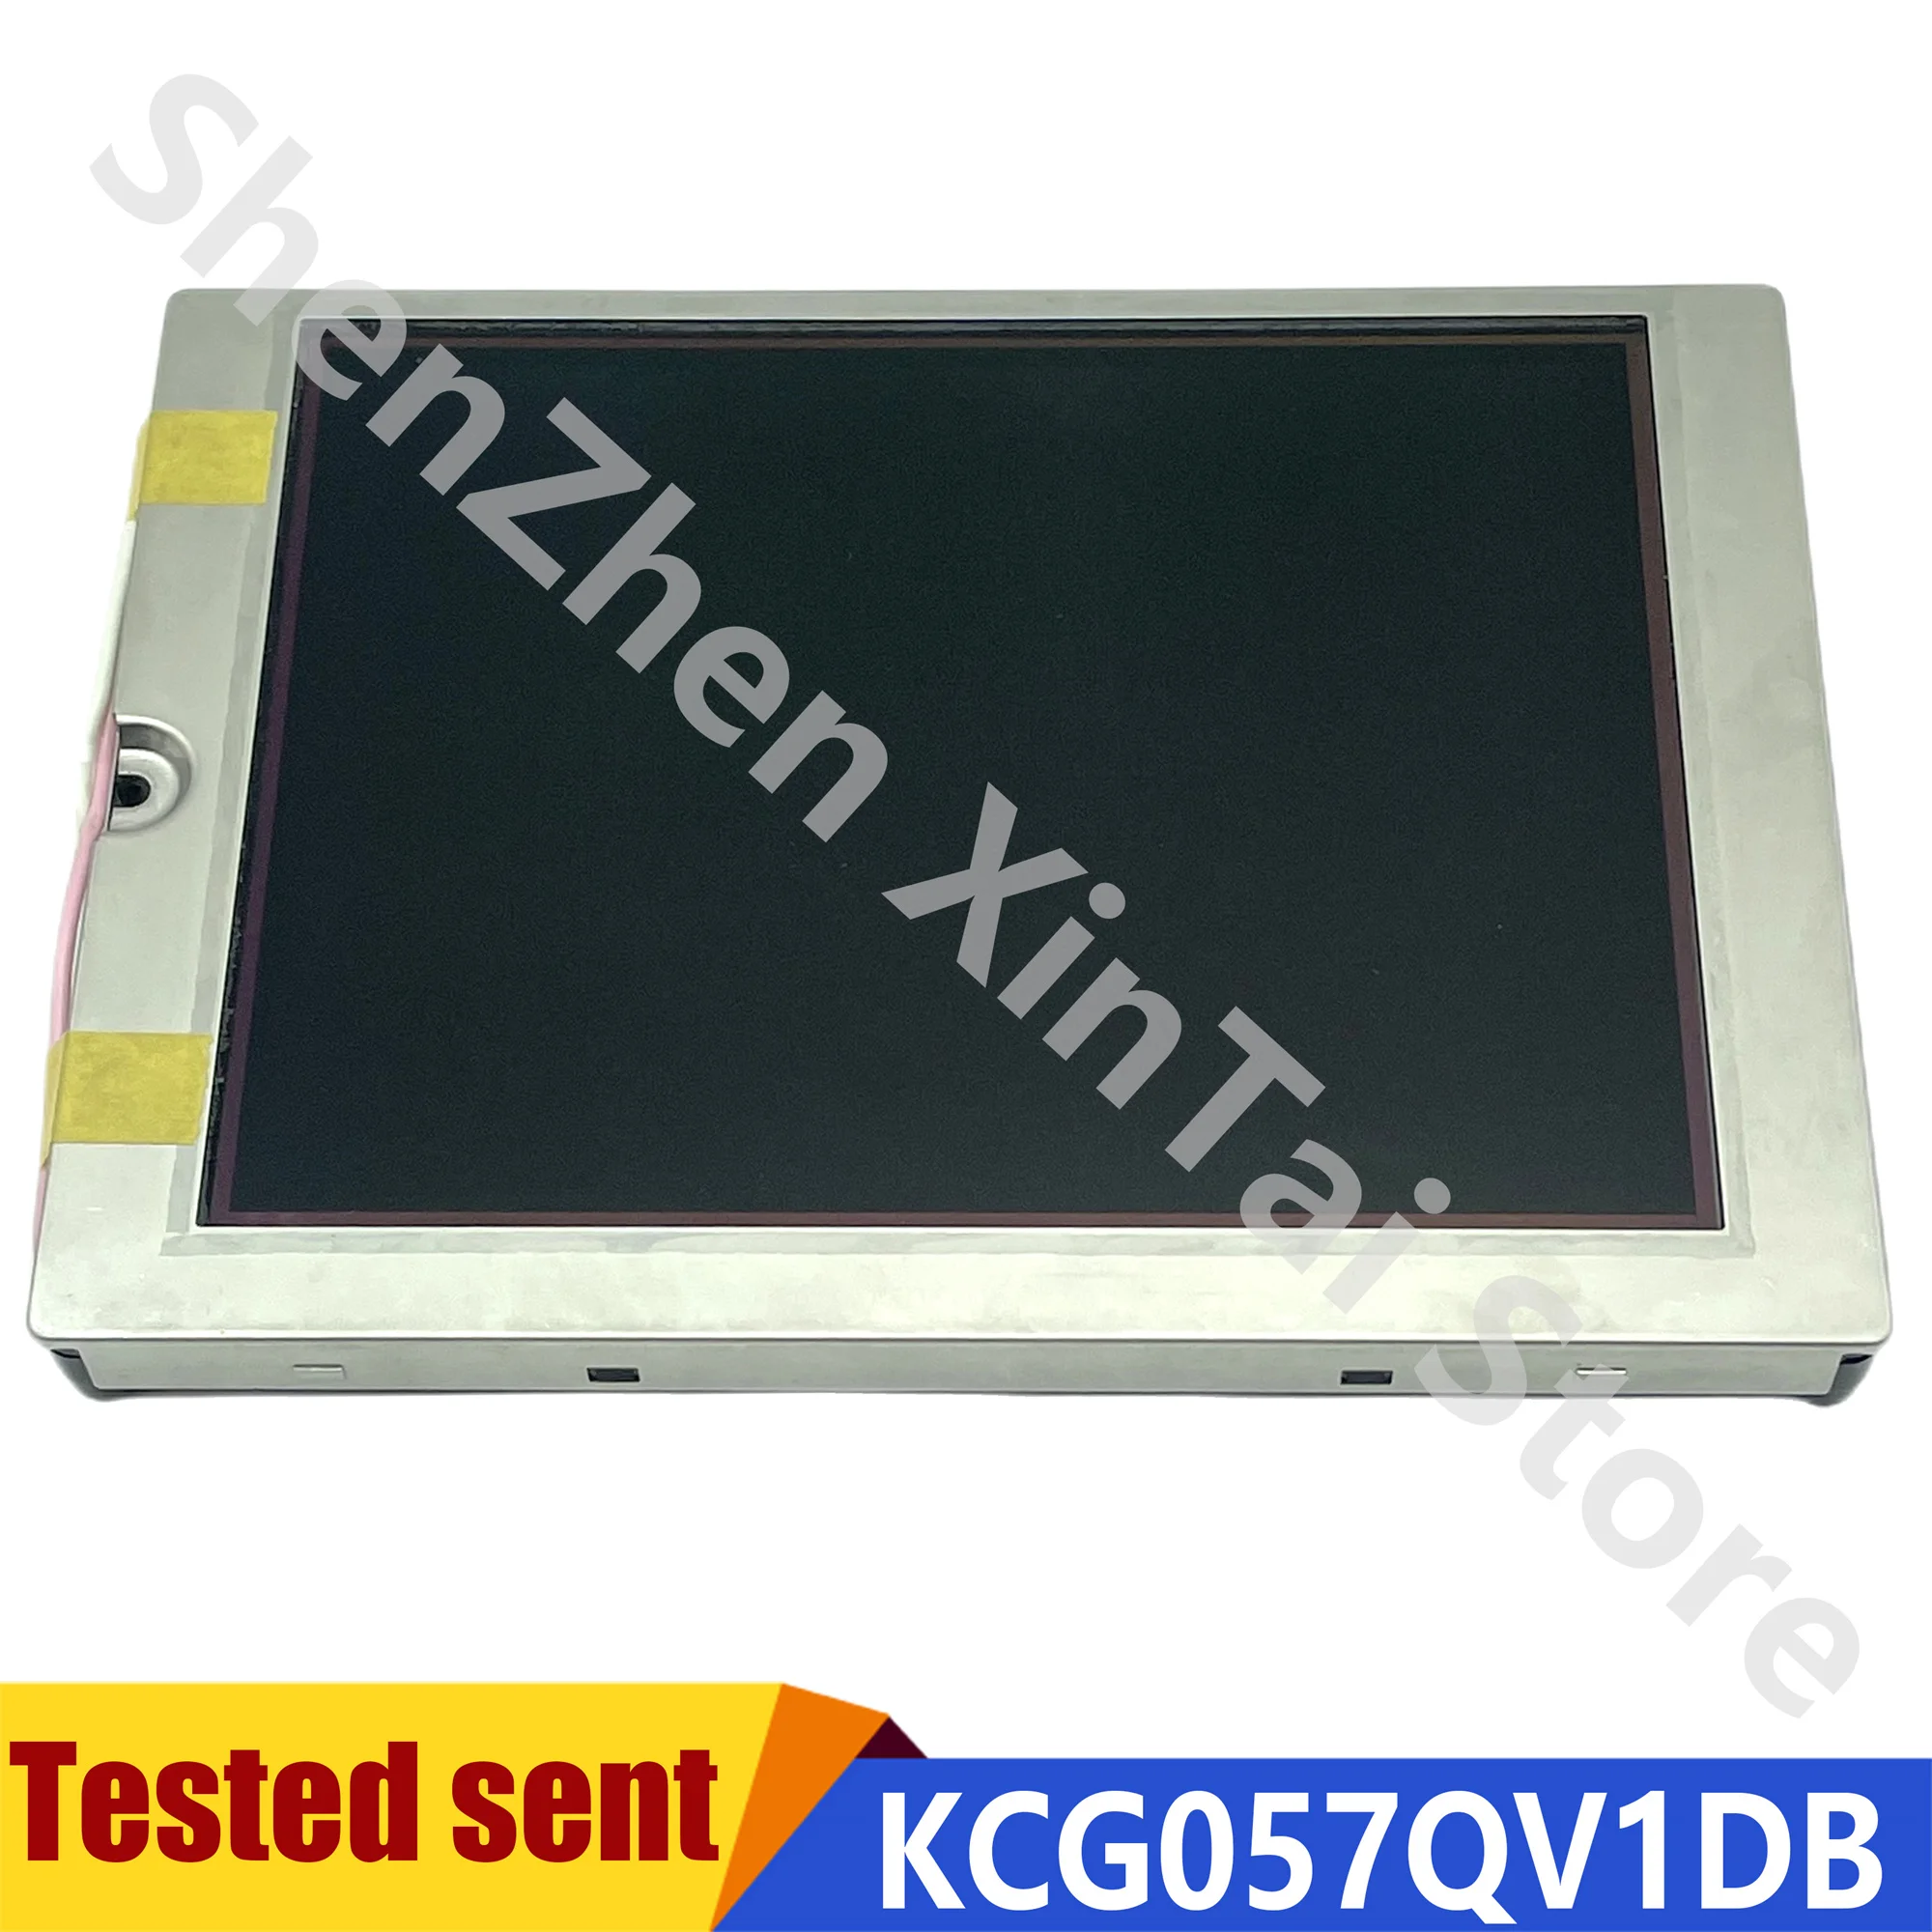 

100% Working Original KCG057QV1DB LCD Panel Display Screen